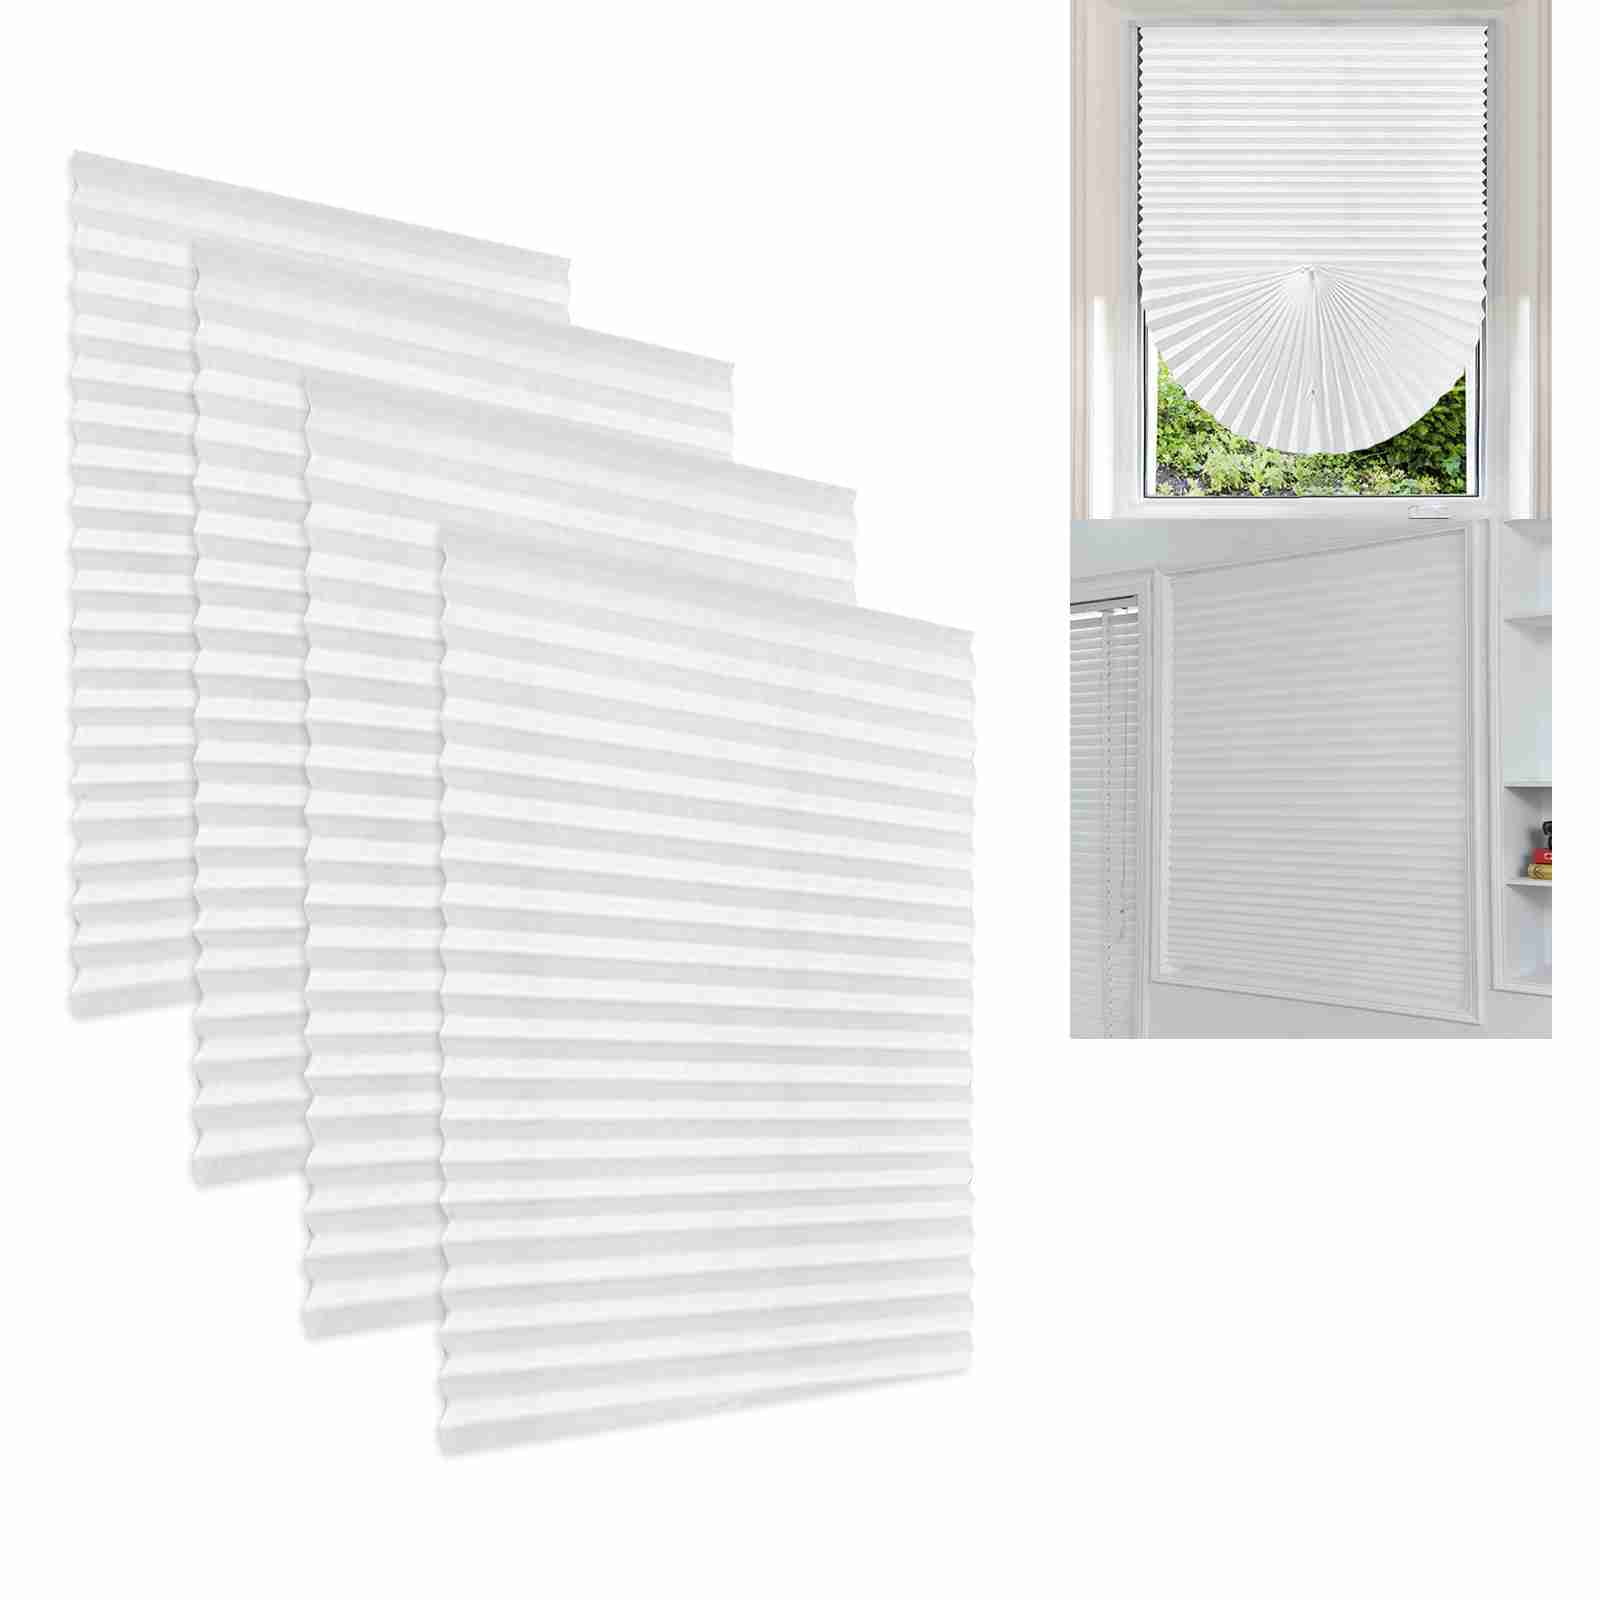 Blinds - Vertical Blinds - Window Blinds - IKEA